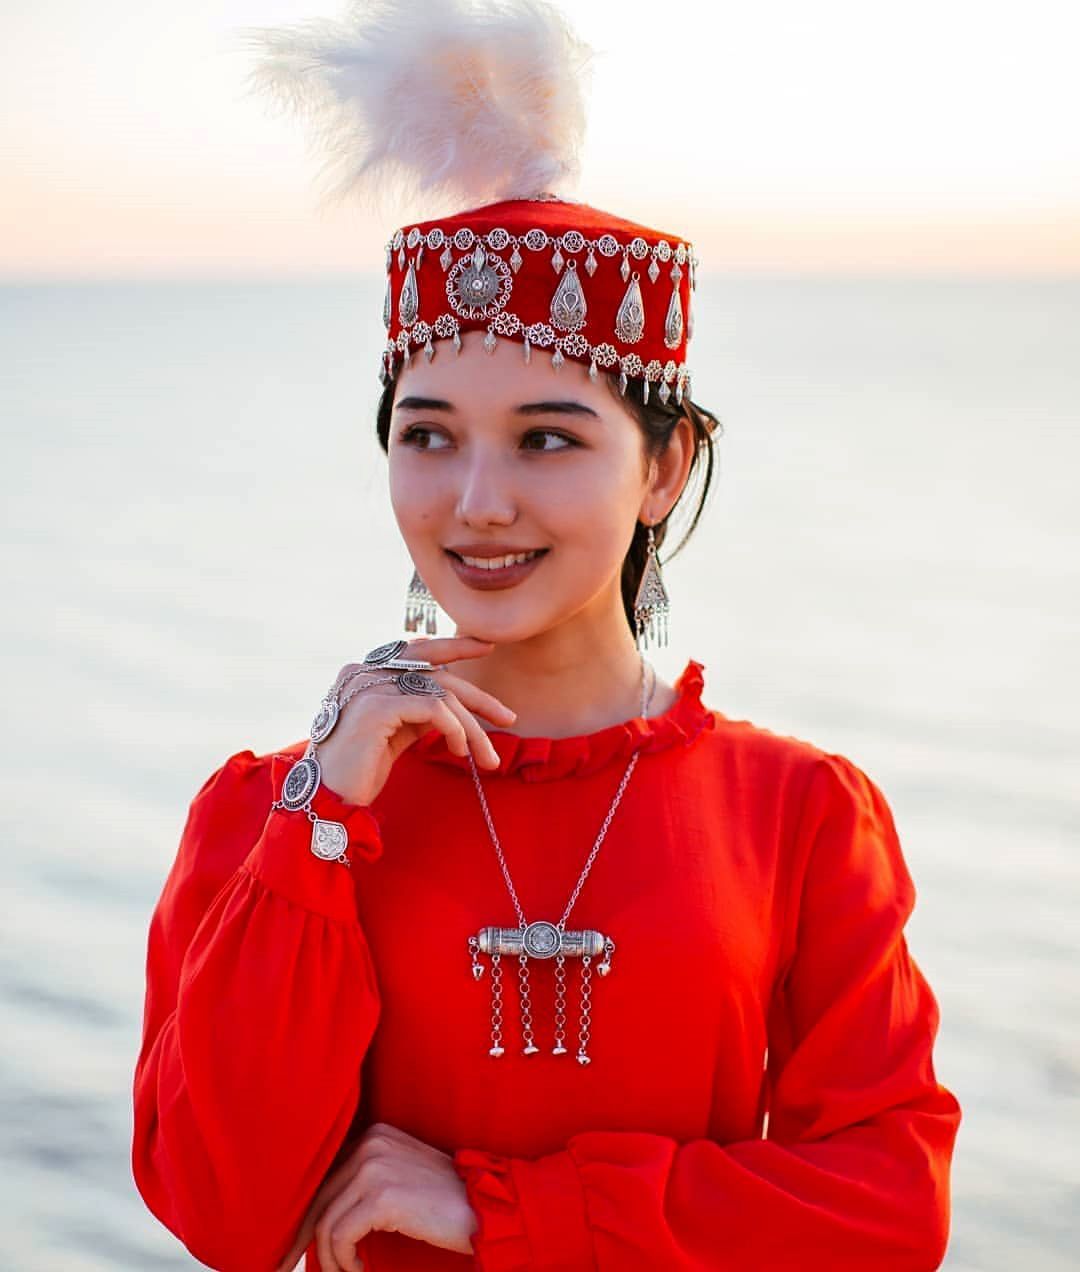 Народные Костюмы Казахстана Картинки